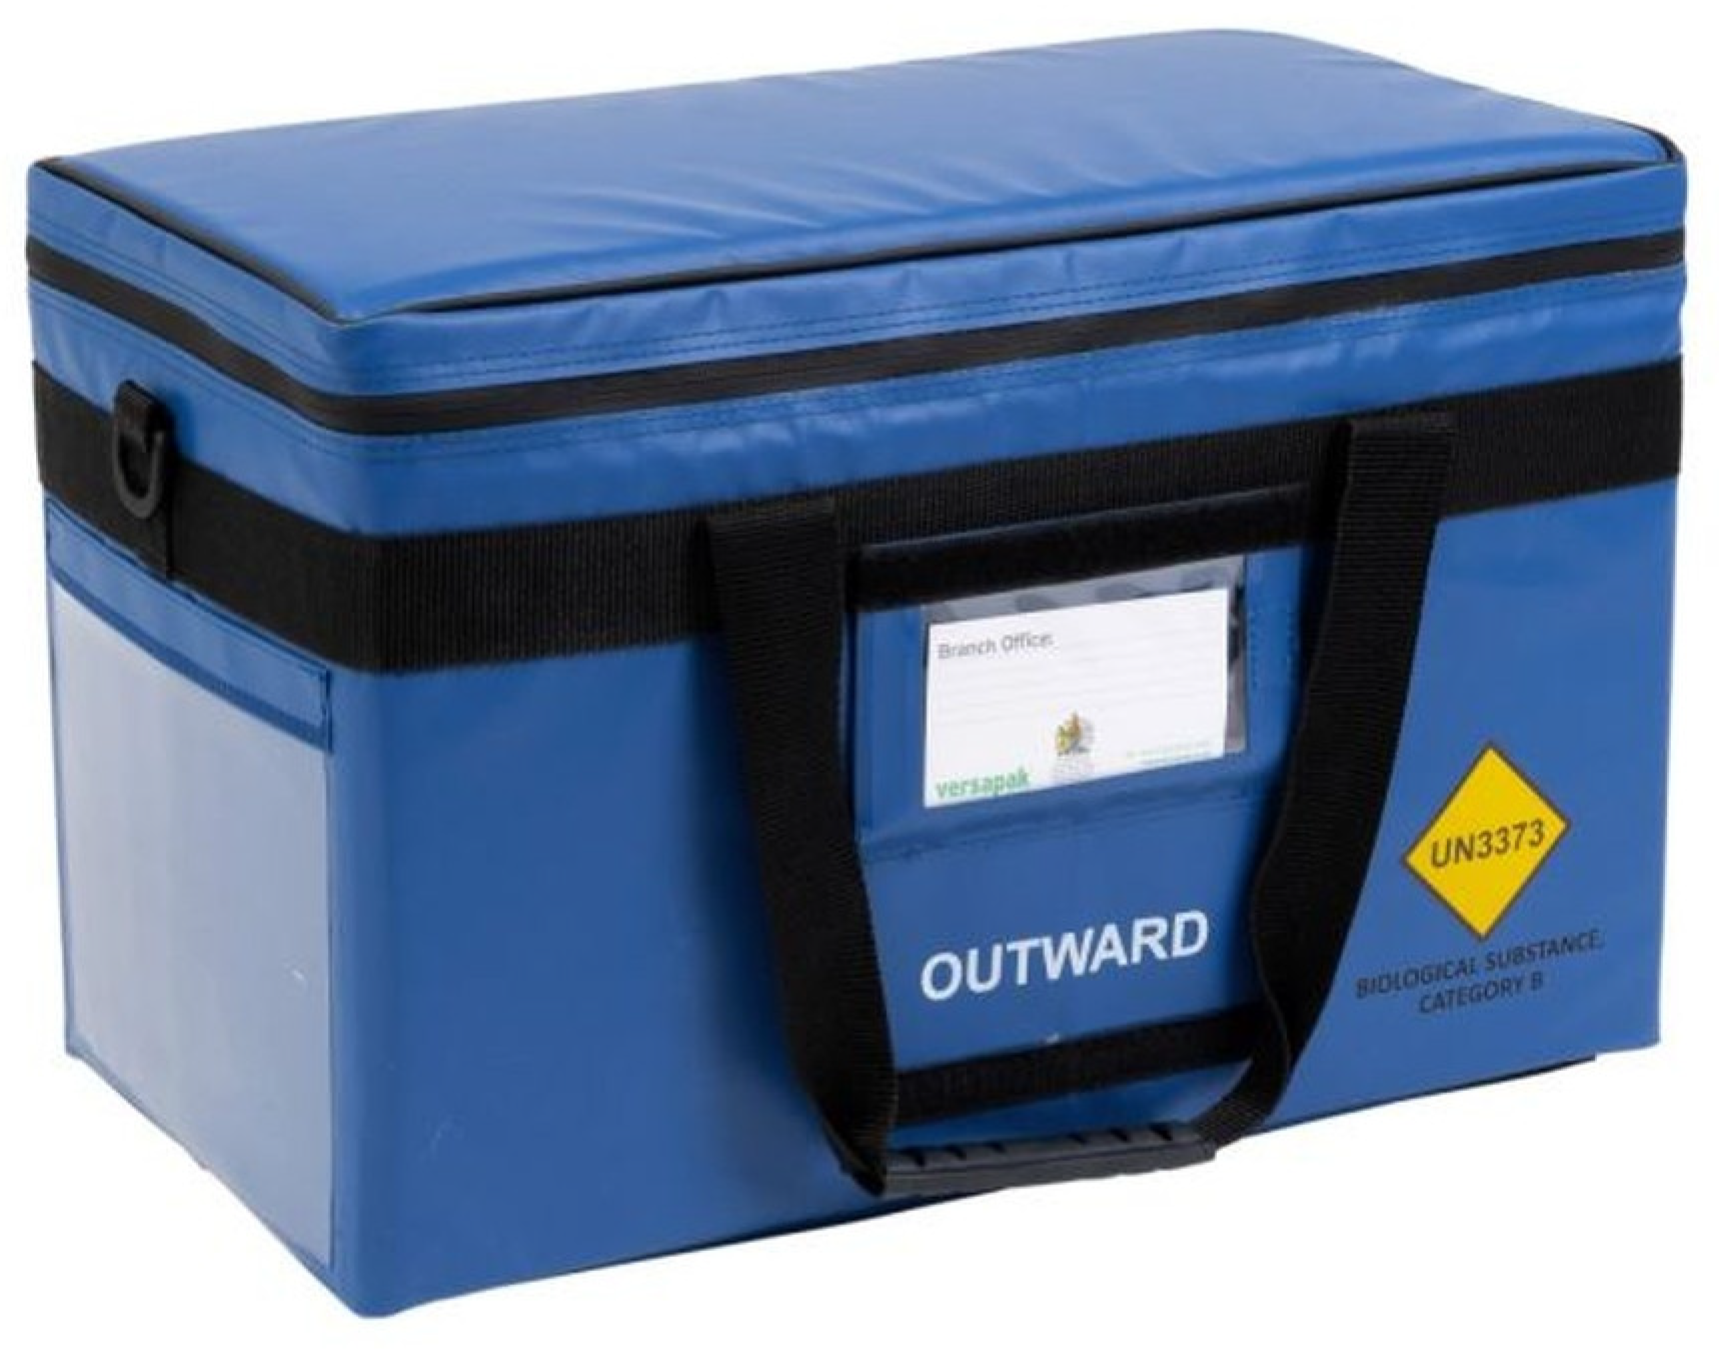 1/10 Mini Safety Equipment Tool Case Medical Travel Storage Box